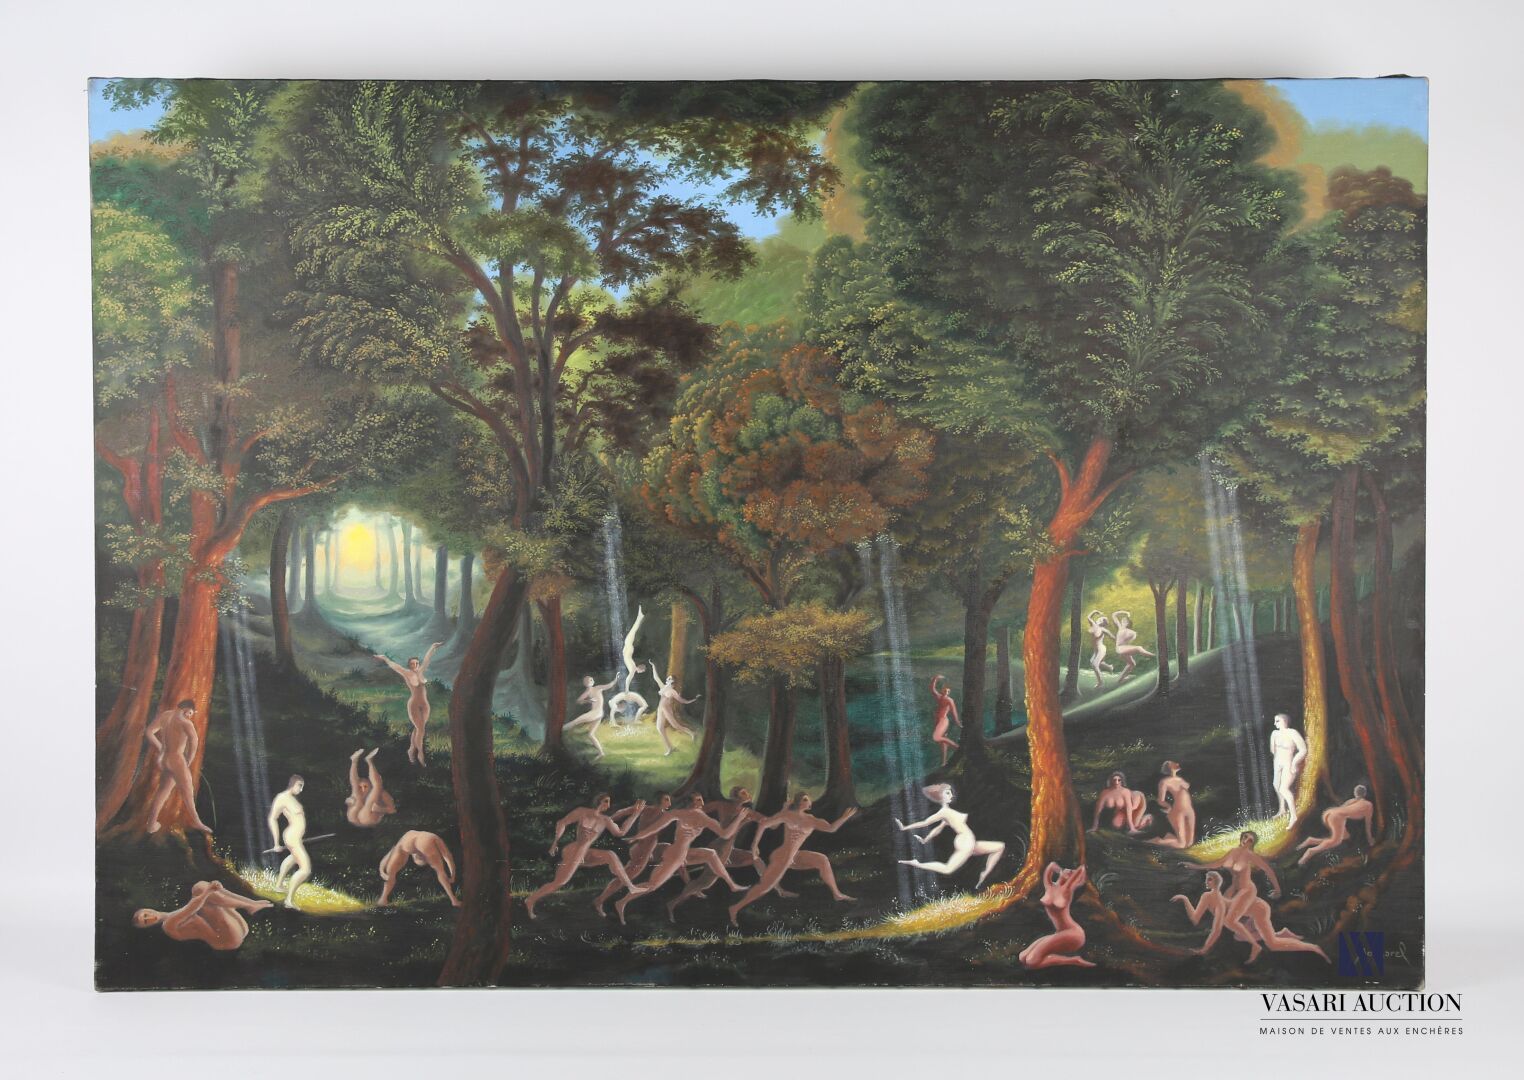 Null 伯纳德 (BONNAREL) (1950)
树林里的狂欢
布面油画
右下方有签名
89,5 x 130,5 cm